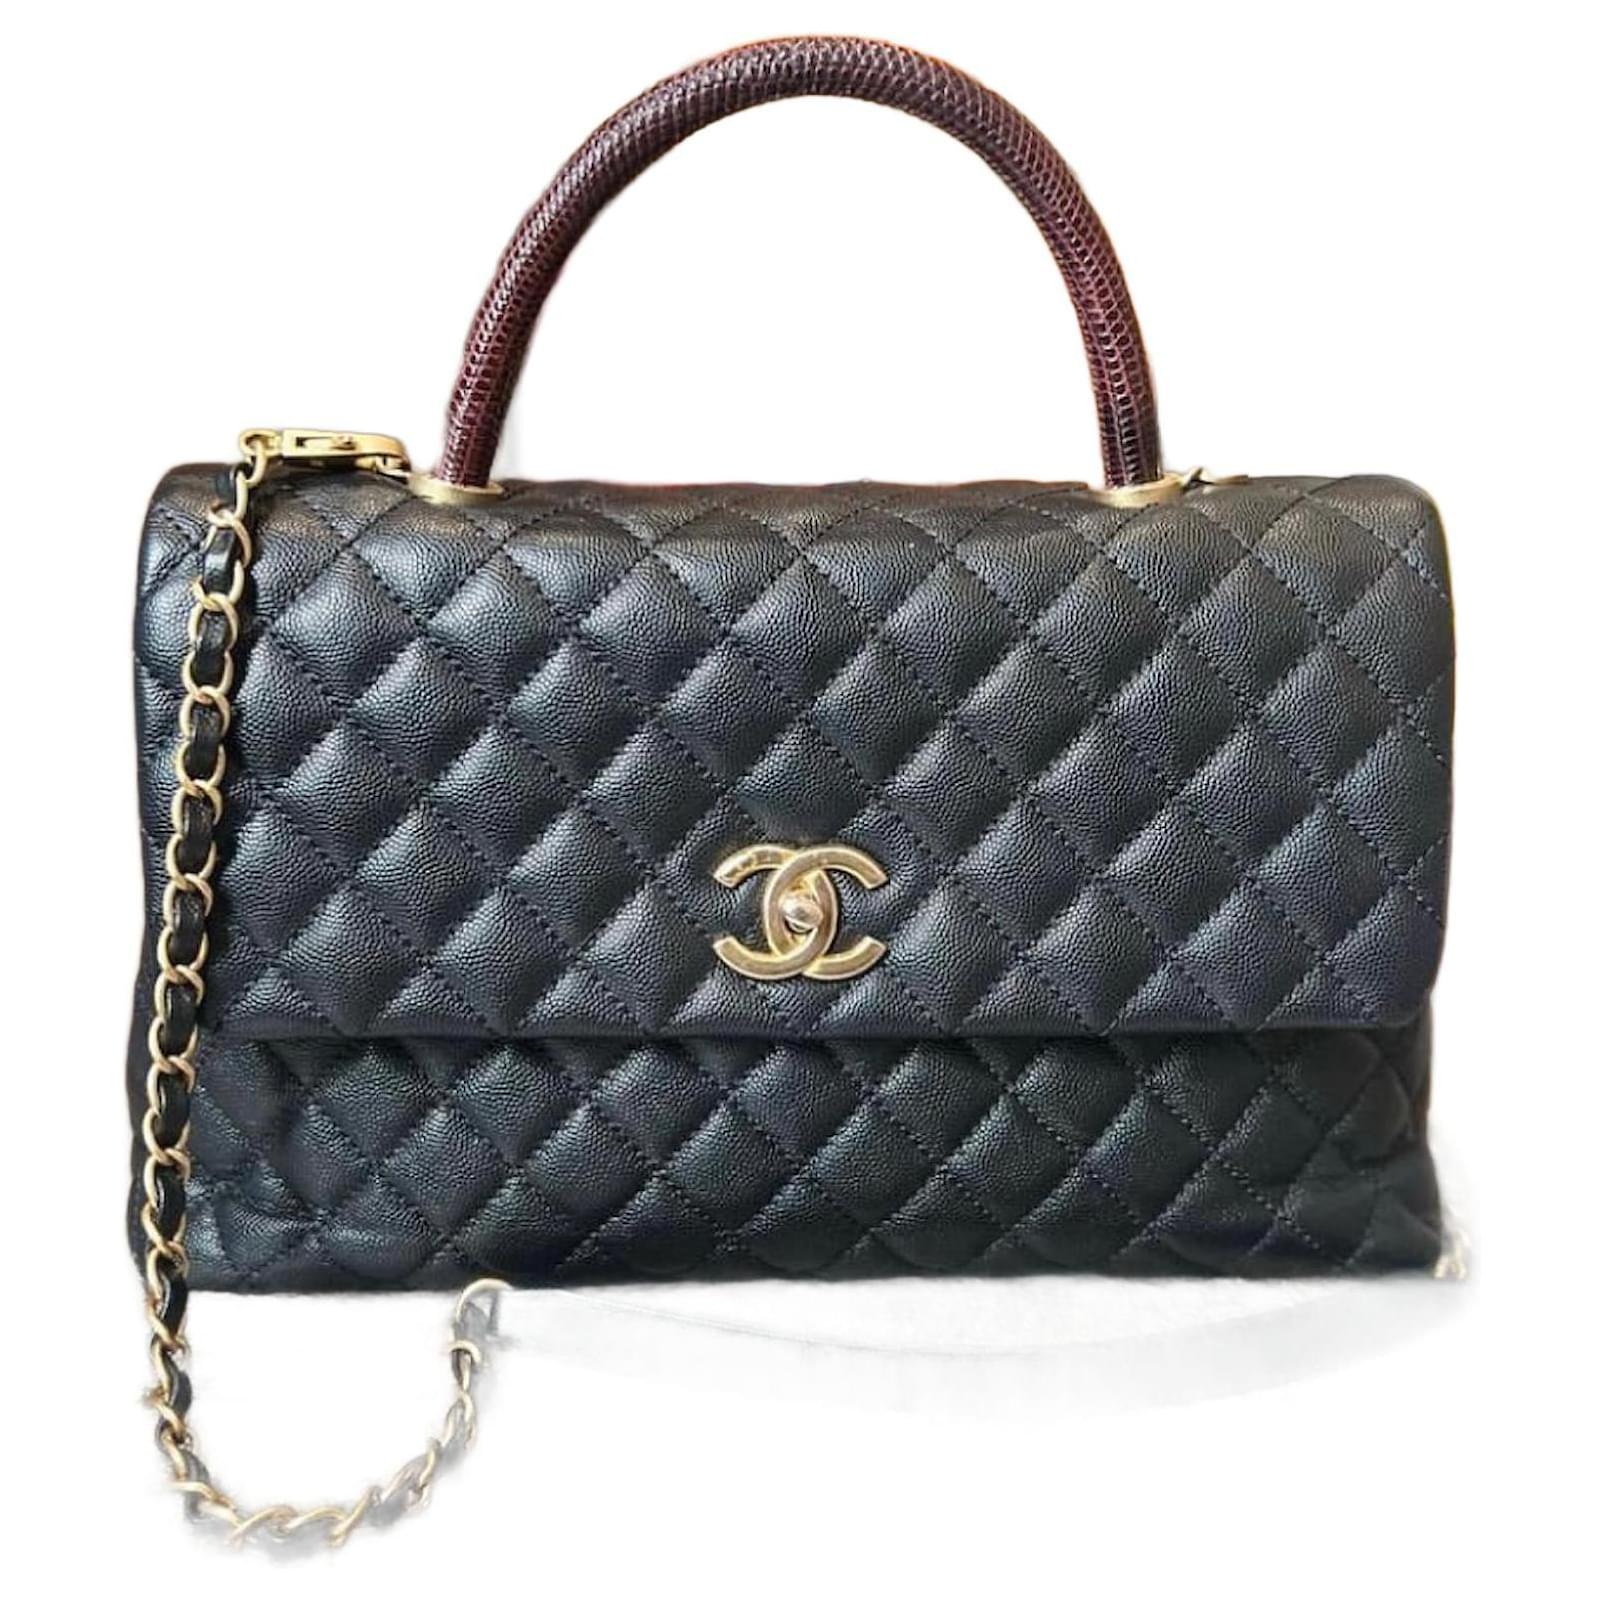 Handbags Chanel Chanel 2018 Limited Edition Medium Black Caviar Quilted Rare Lizard Burgundy Coco Handle Bag